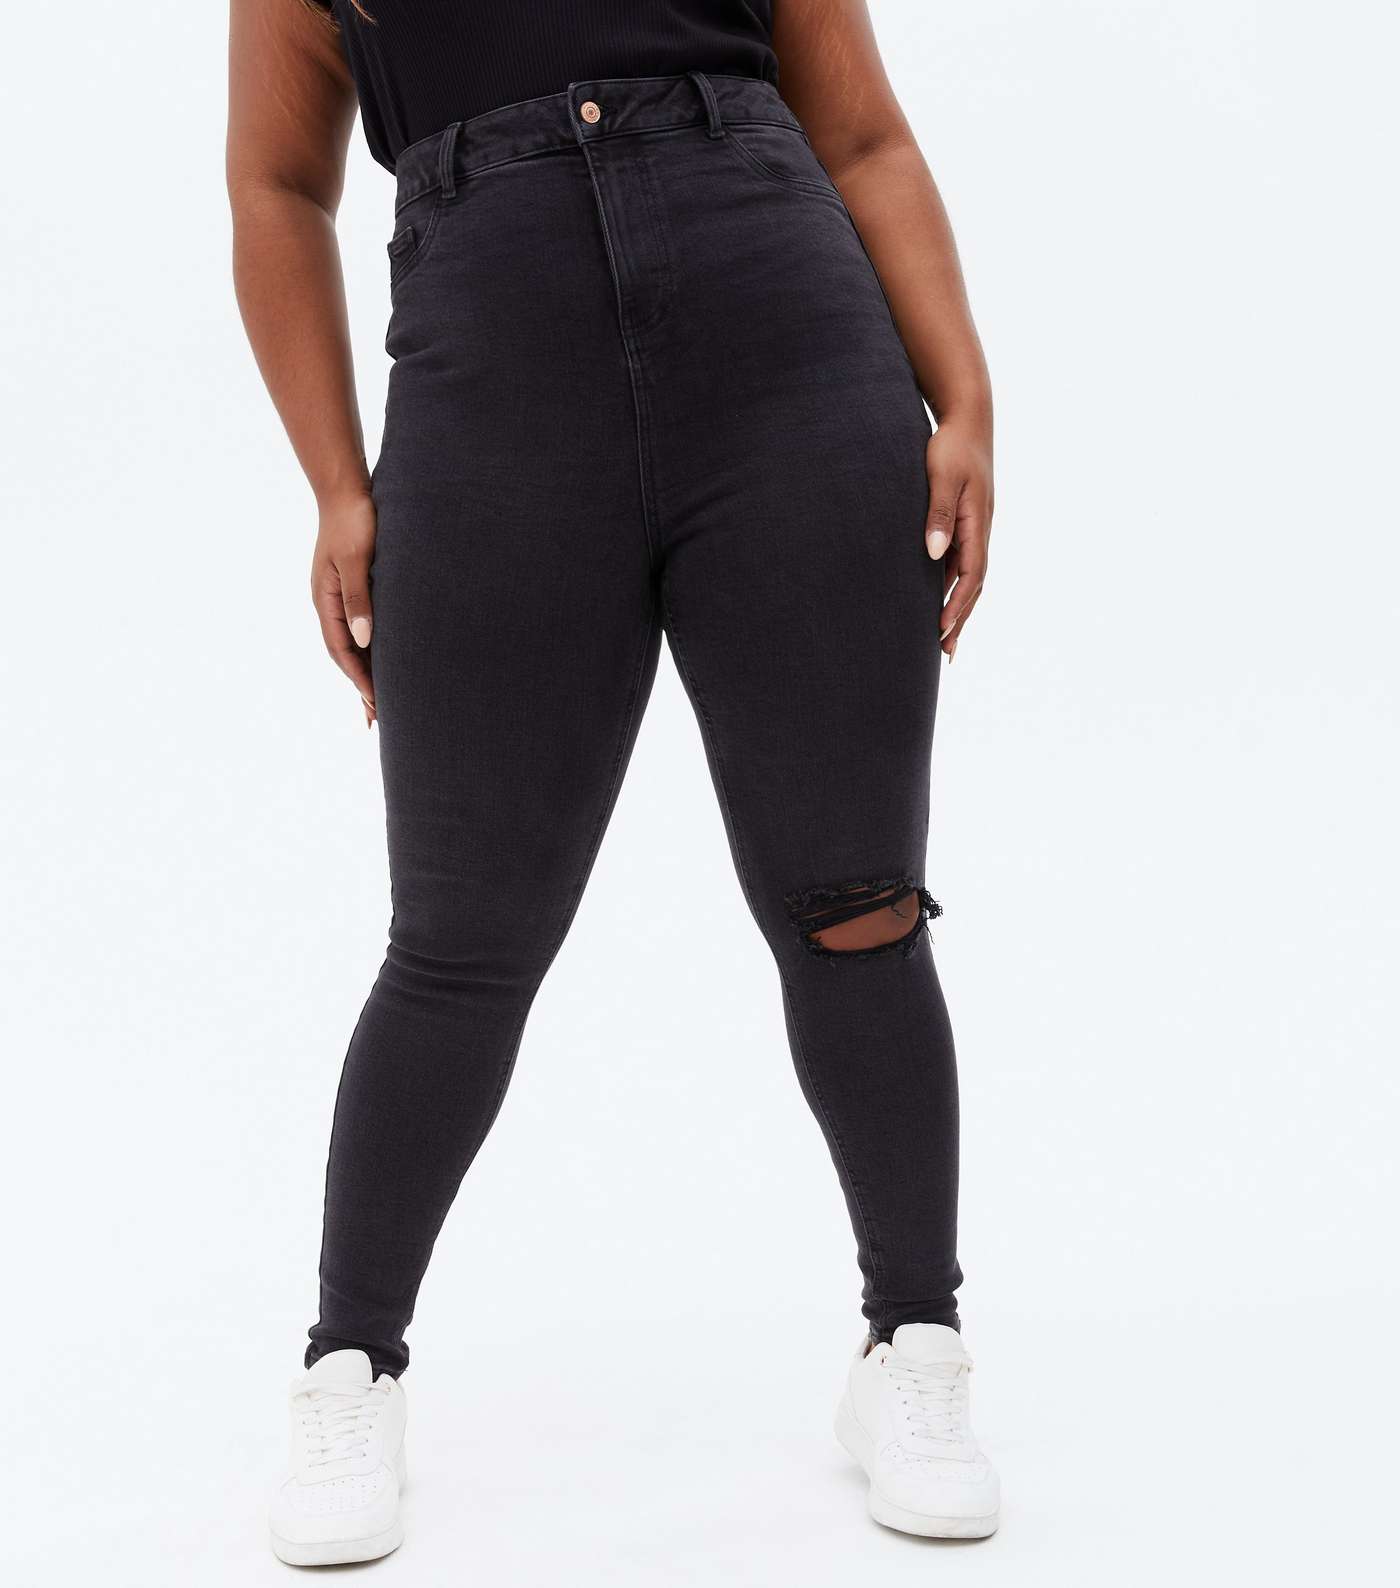 Curves Black Ripped High Waist Hallie Super Skinny Jeans Image 2